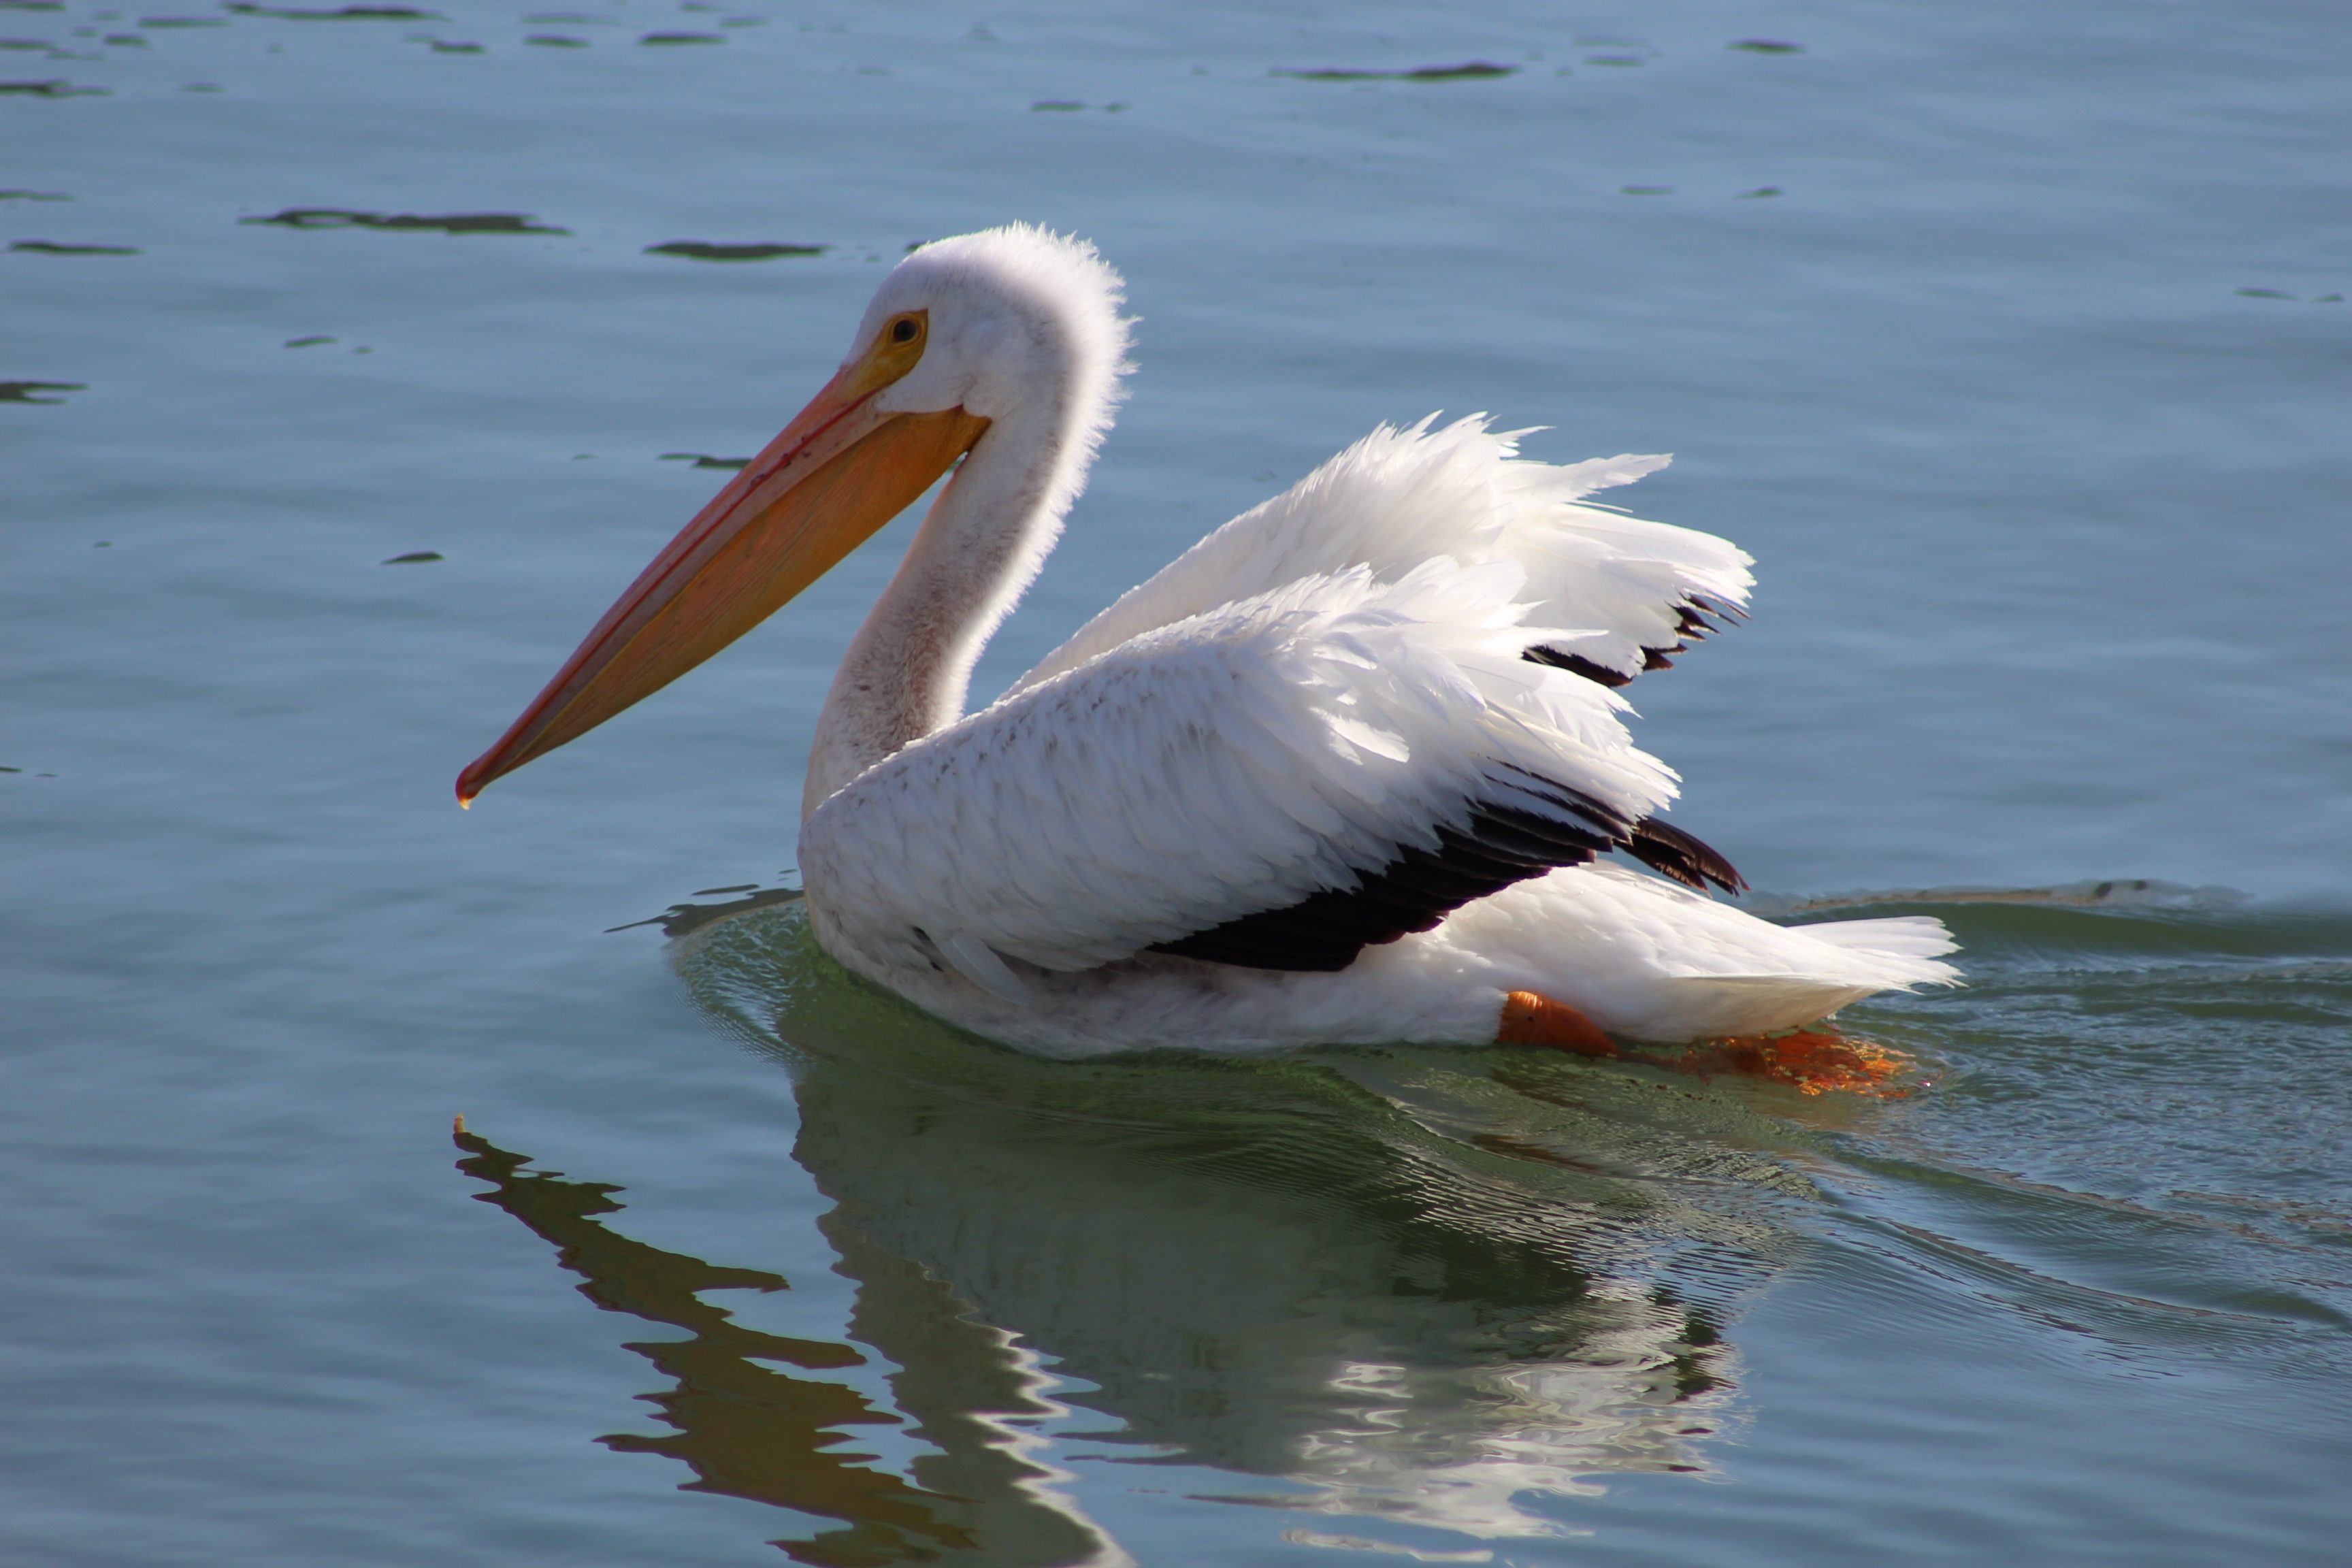 Idaho Fish and Game takes aim at pelicans – Idaho Business Review